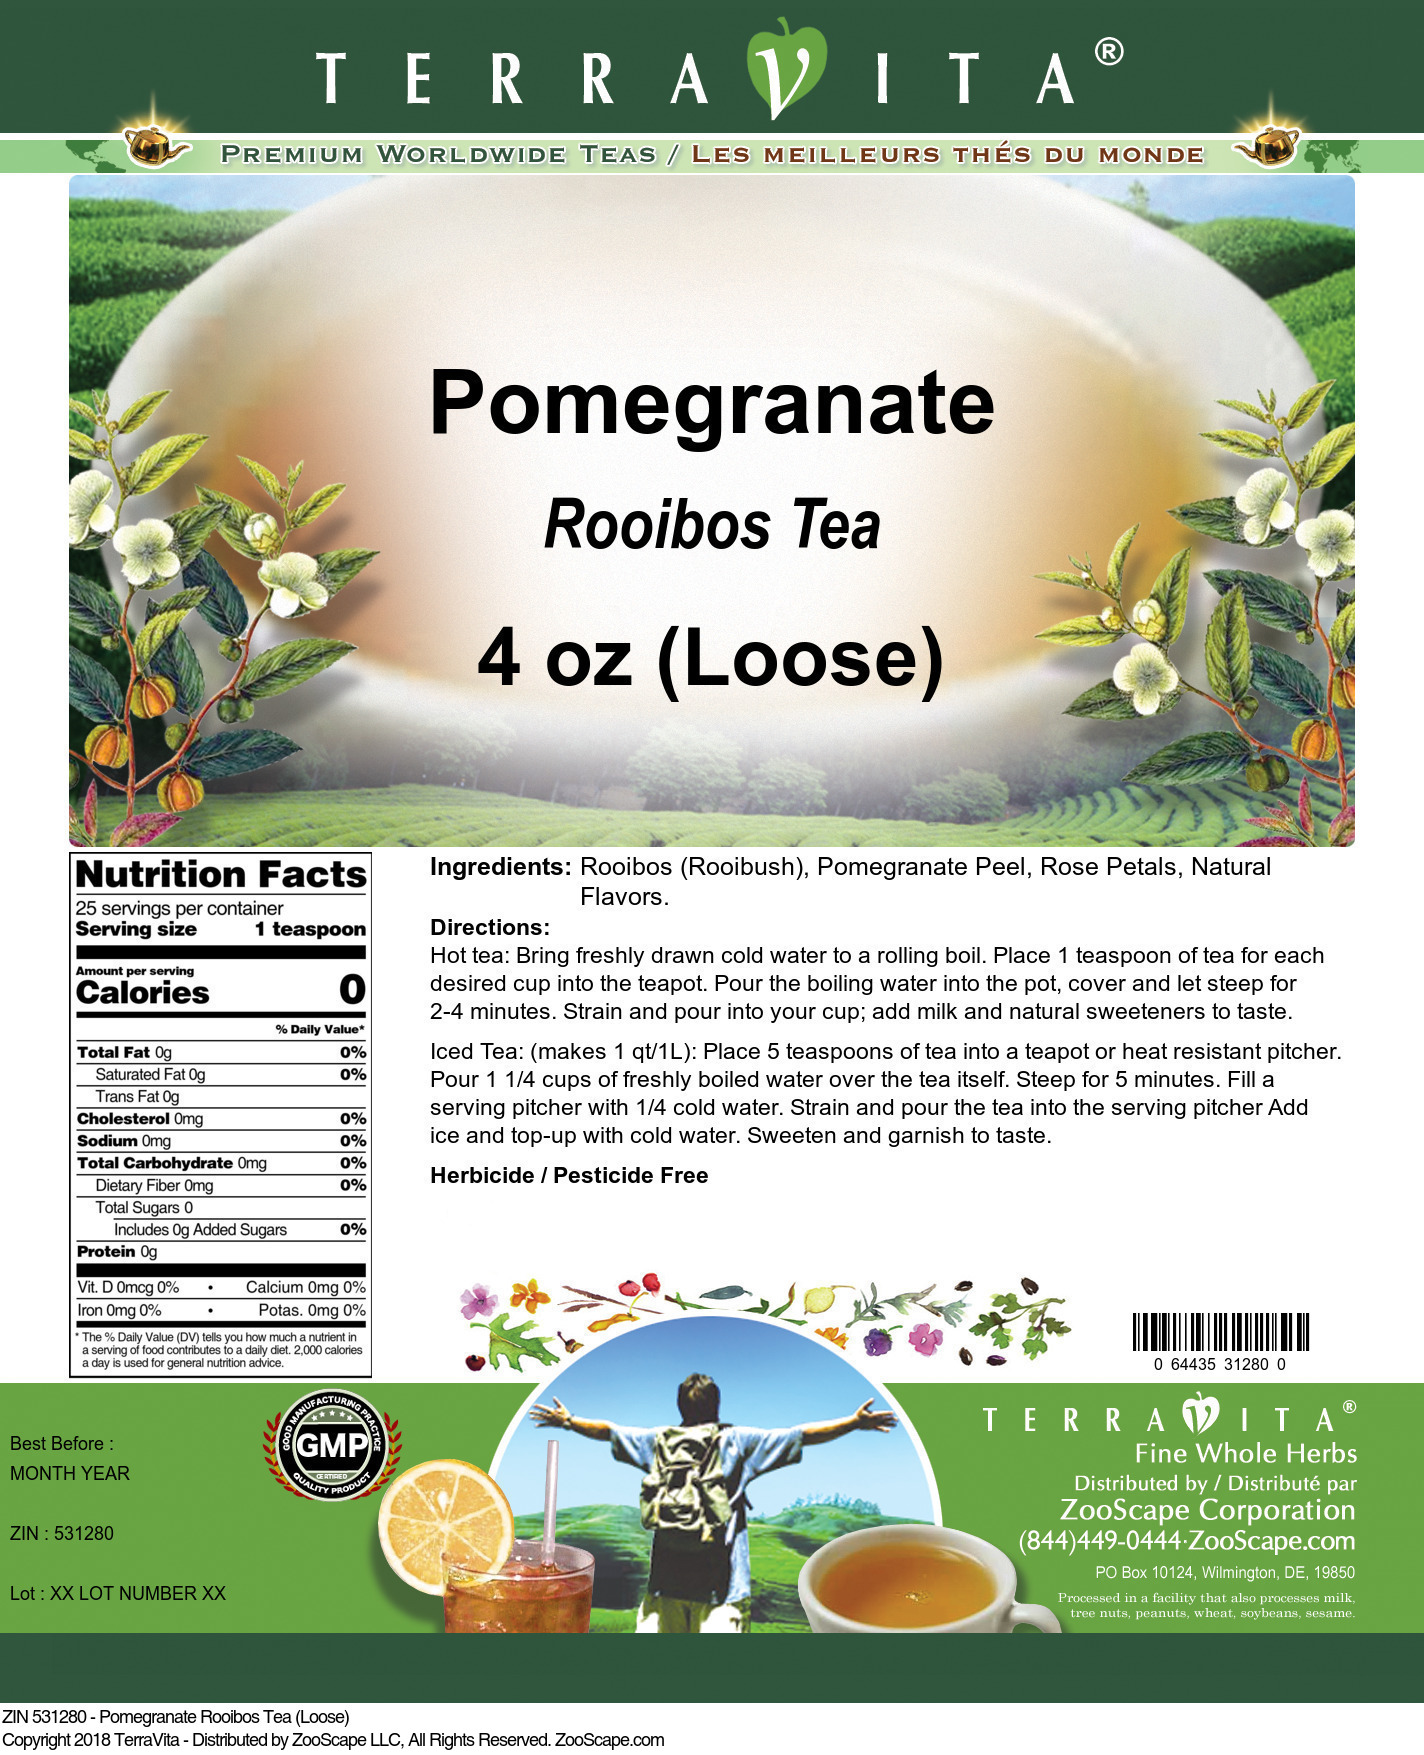 Pomegranate Rooibos Tea (Loose) - Label